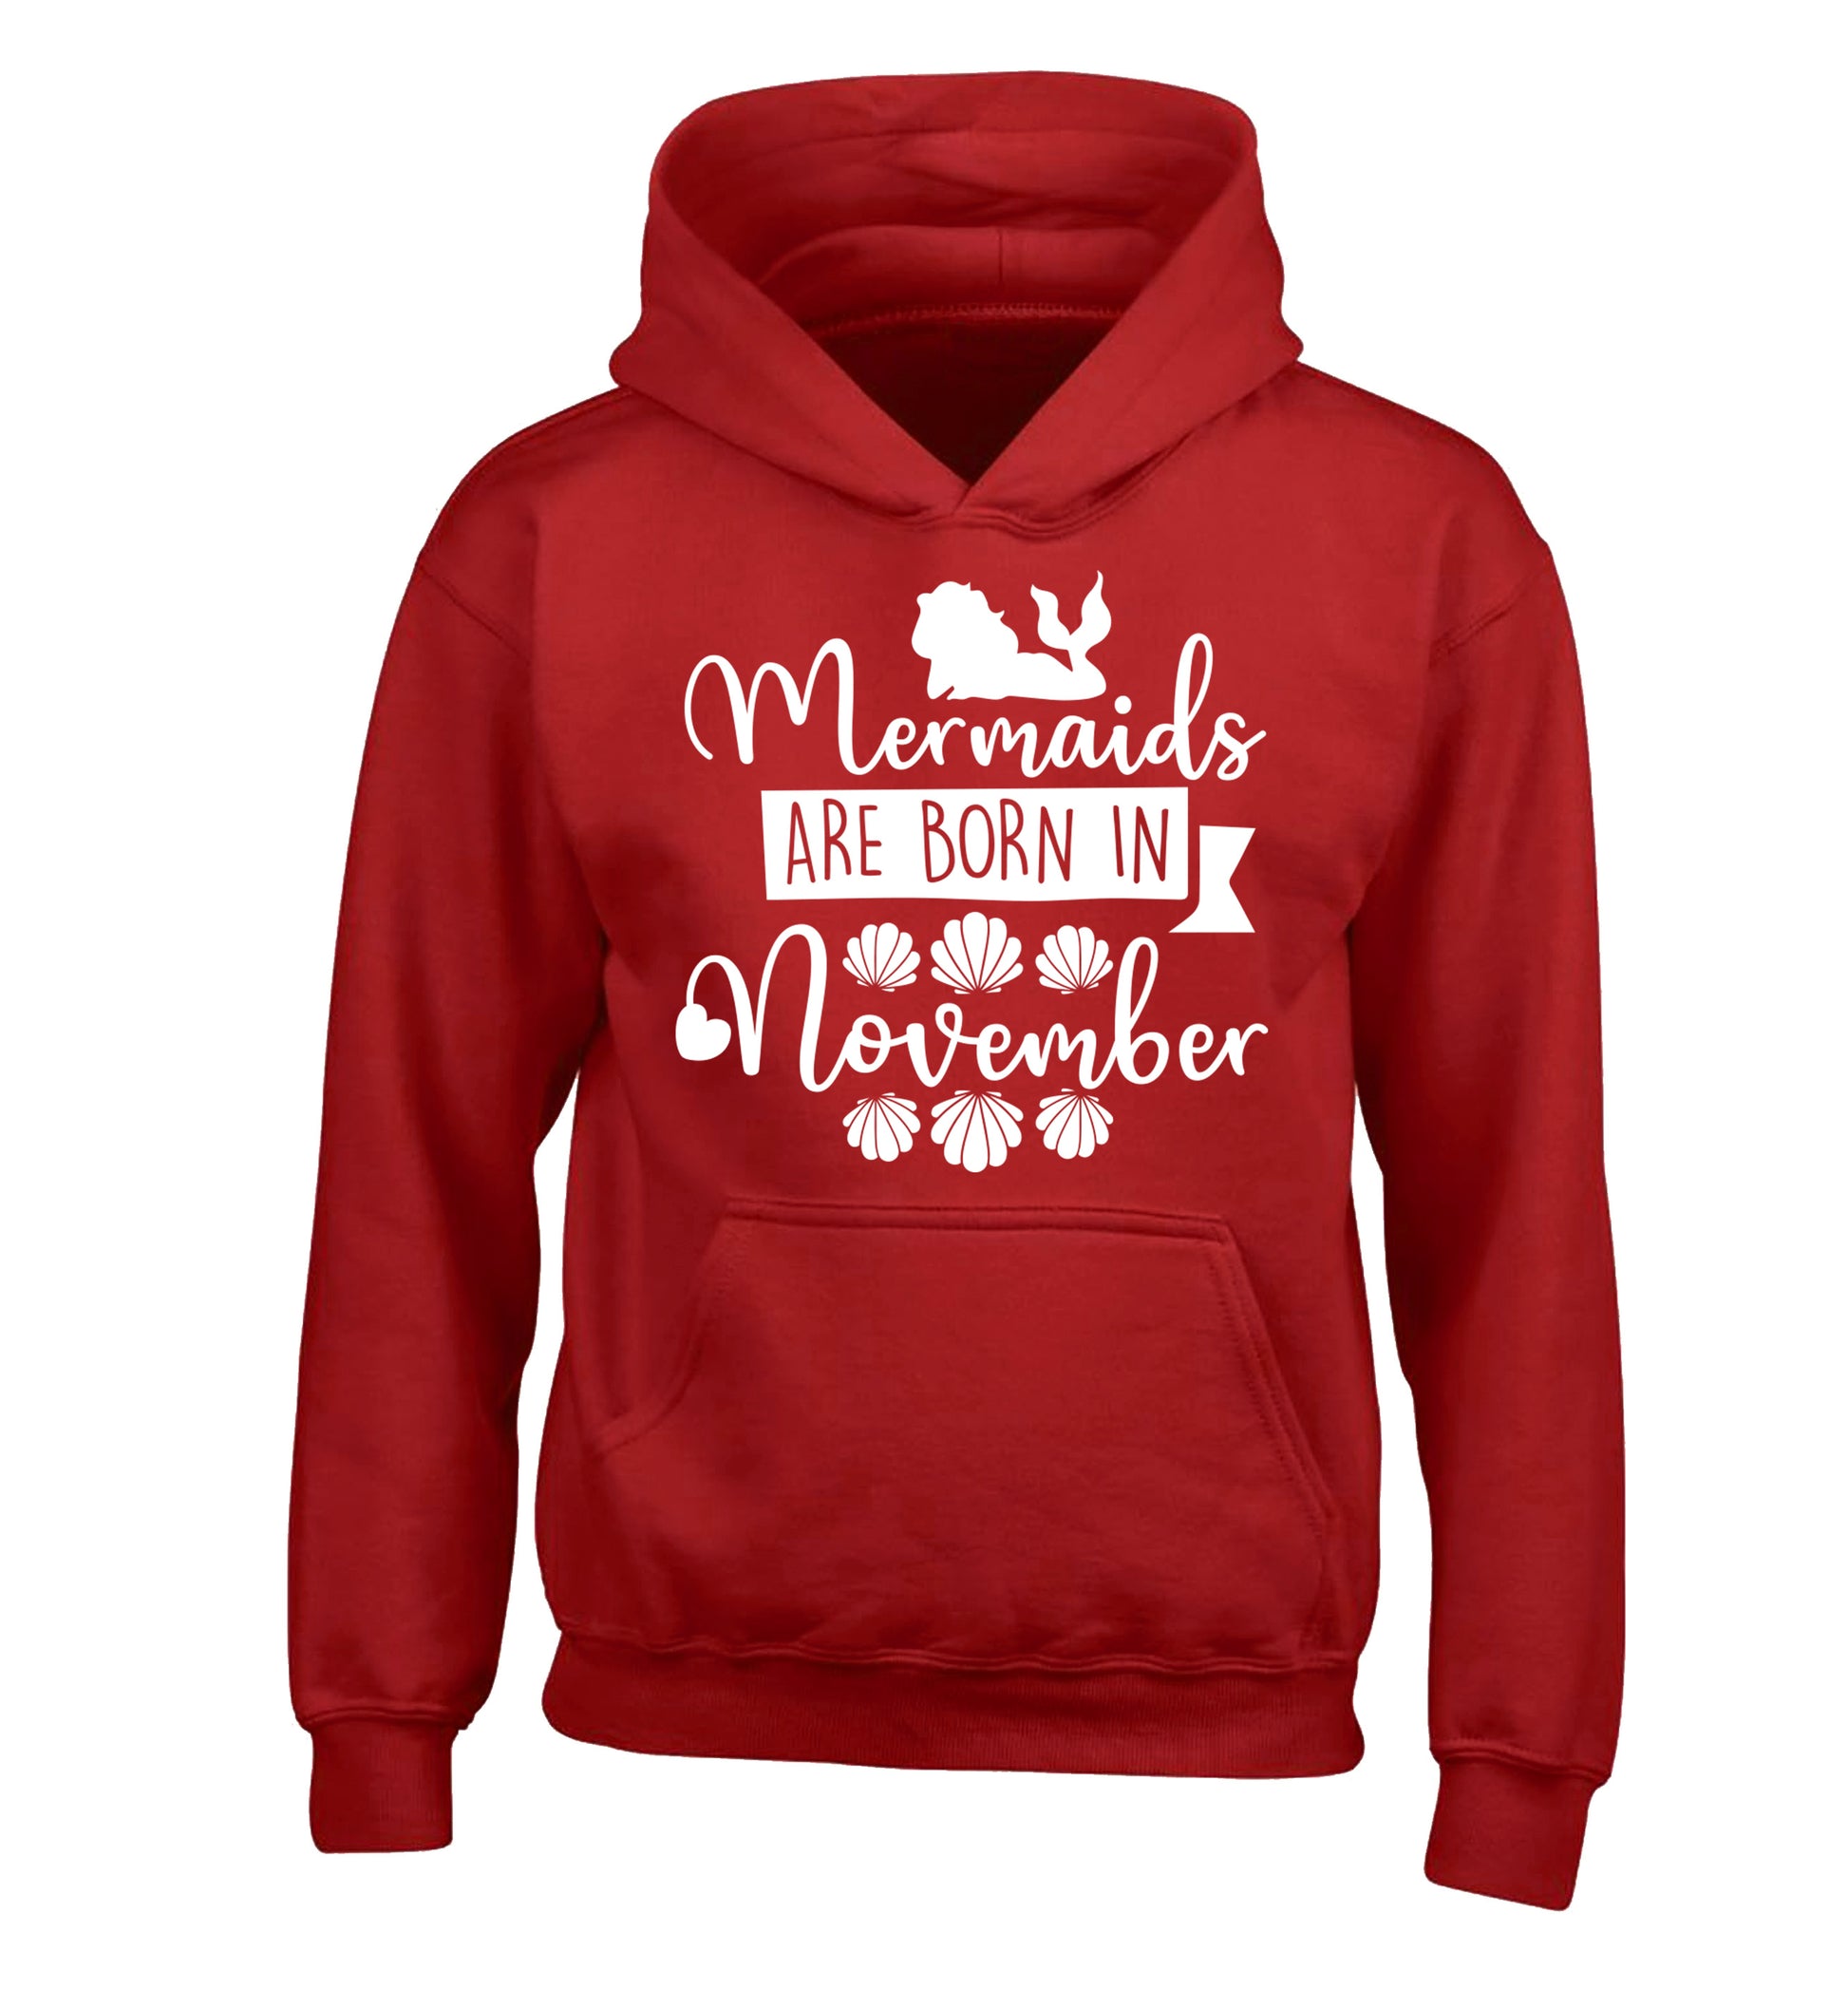 Mermaids are born in November children's red hoodie 12-13 Years